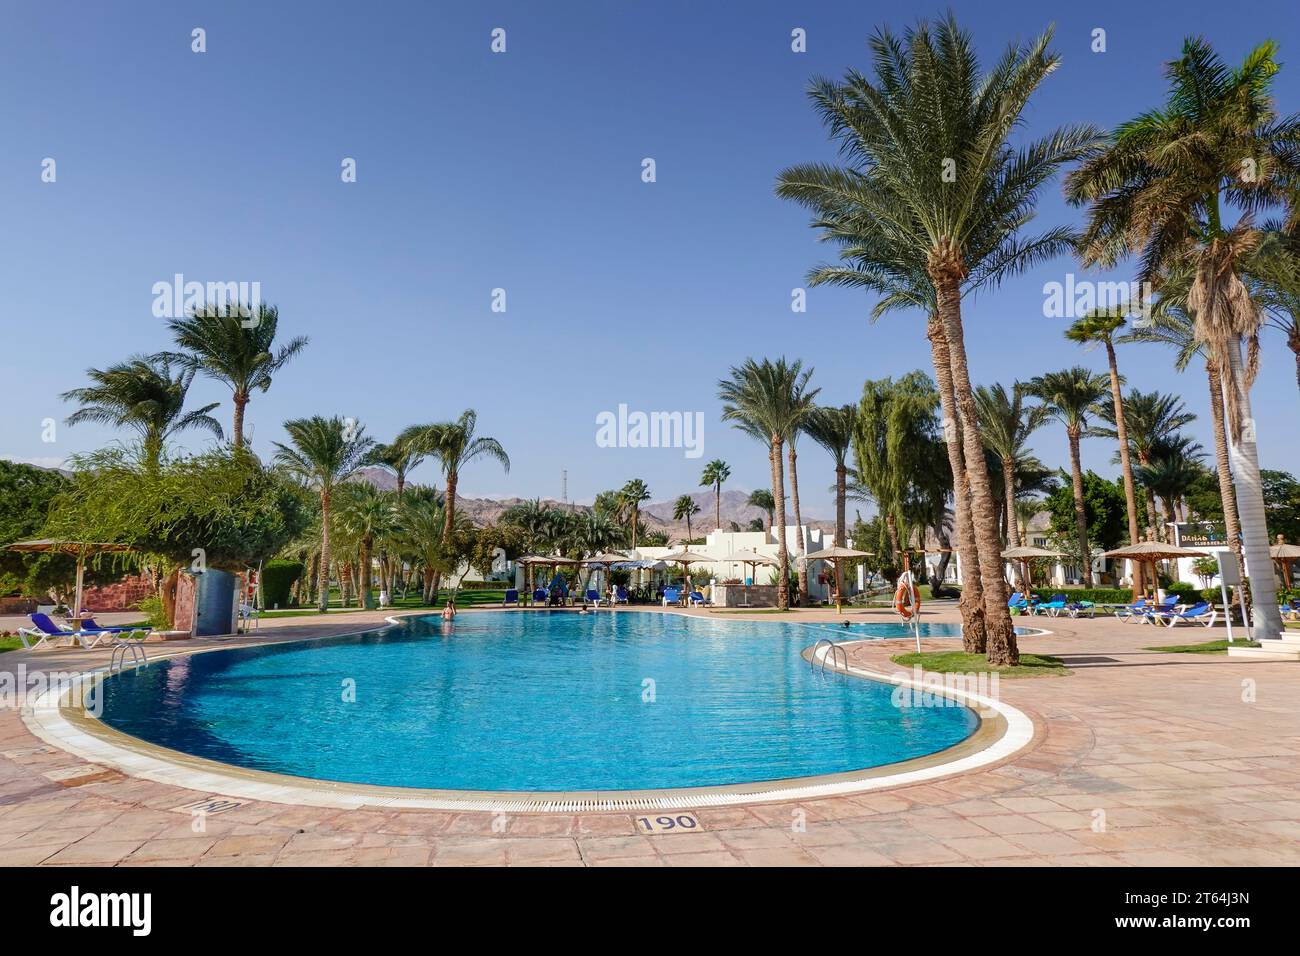 Hotelzimmer, Simmingpool, Palmen, Hotelanlage Tirana, South Dahab, Sinai, Ägypten Stock Photo